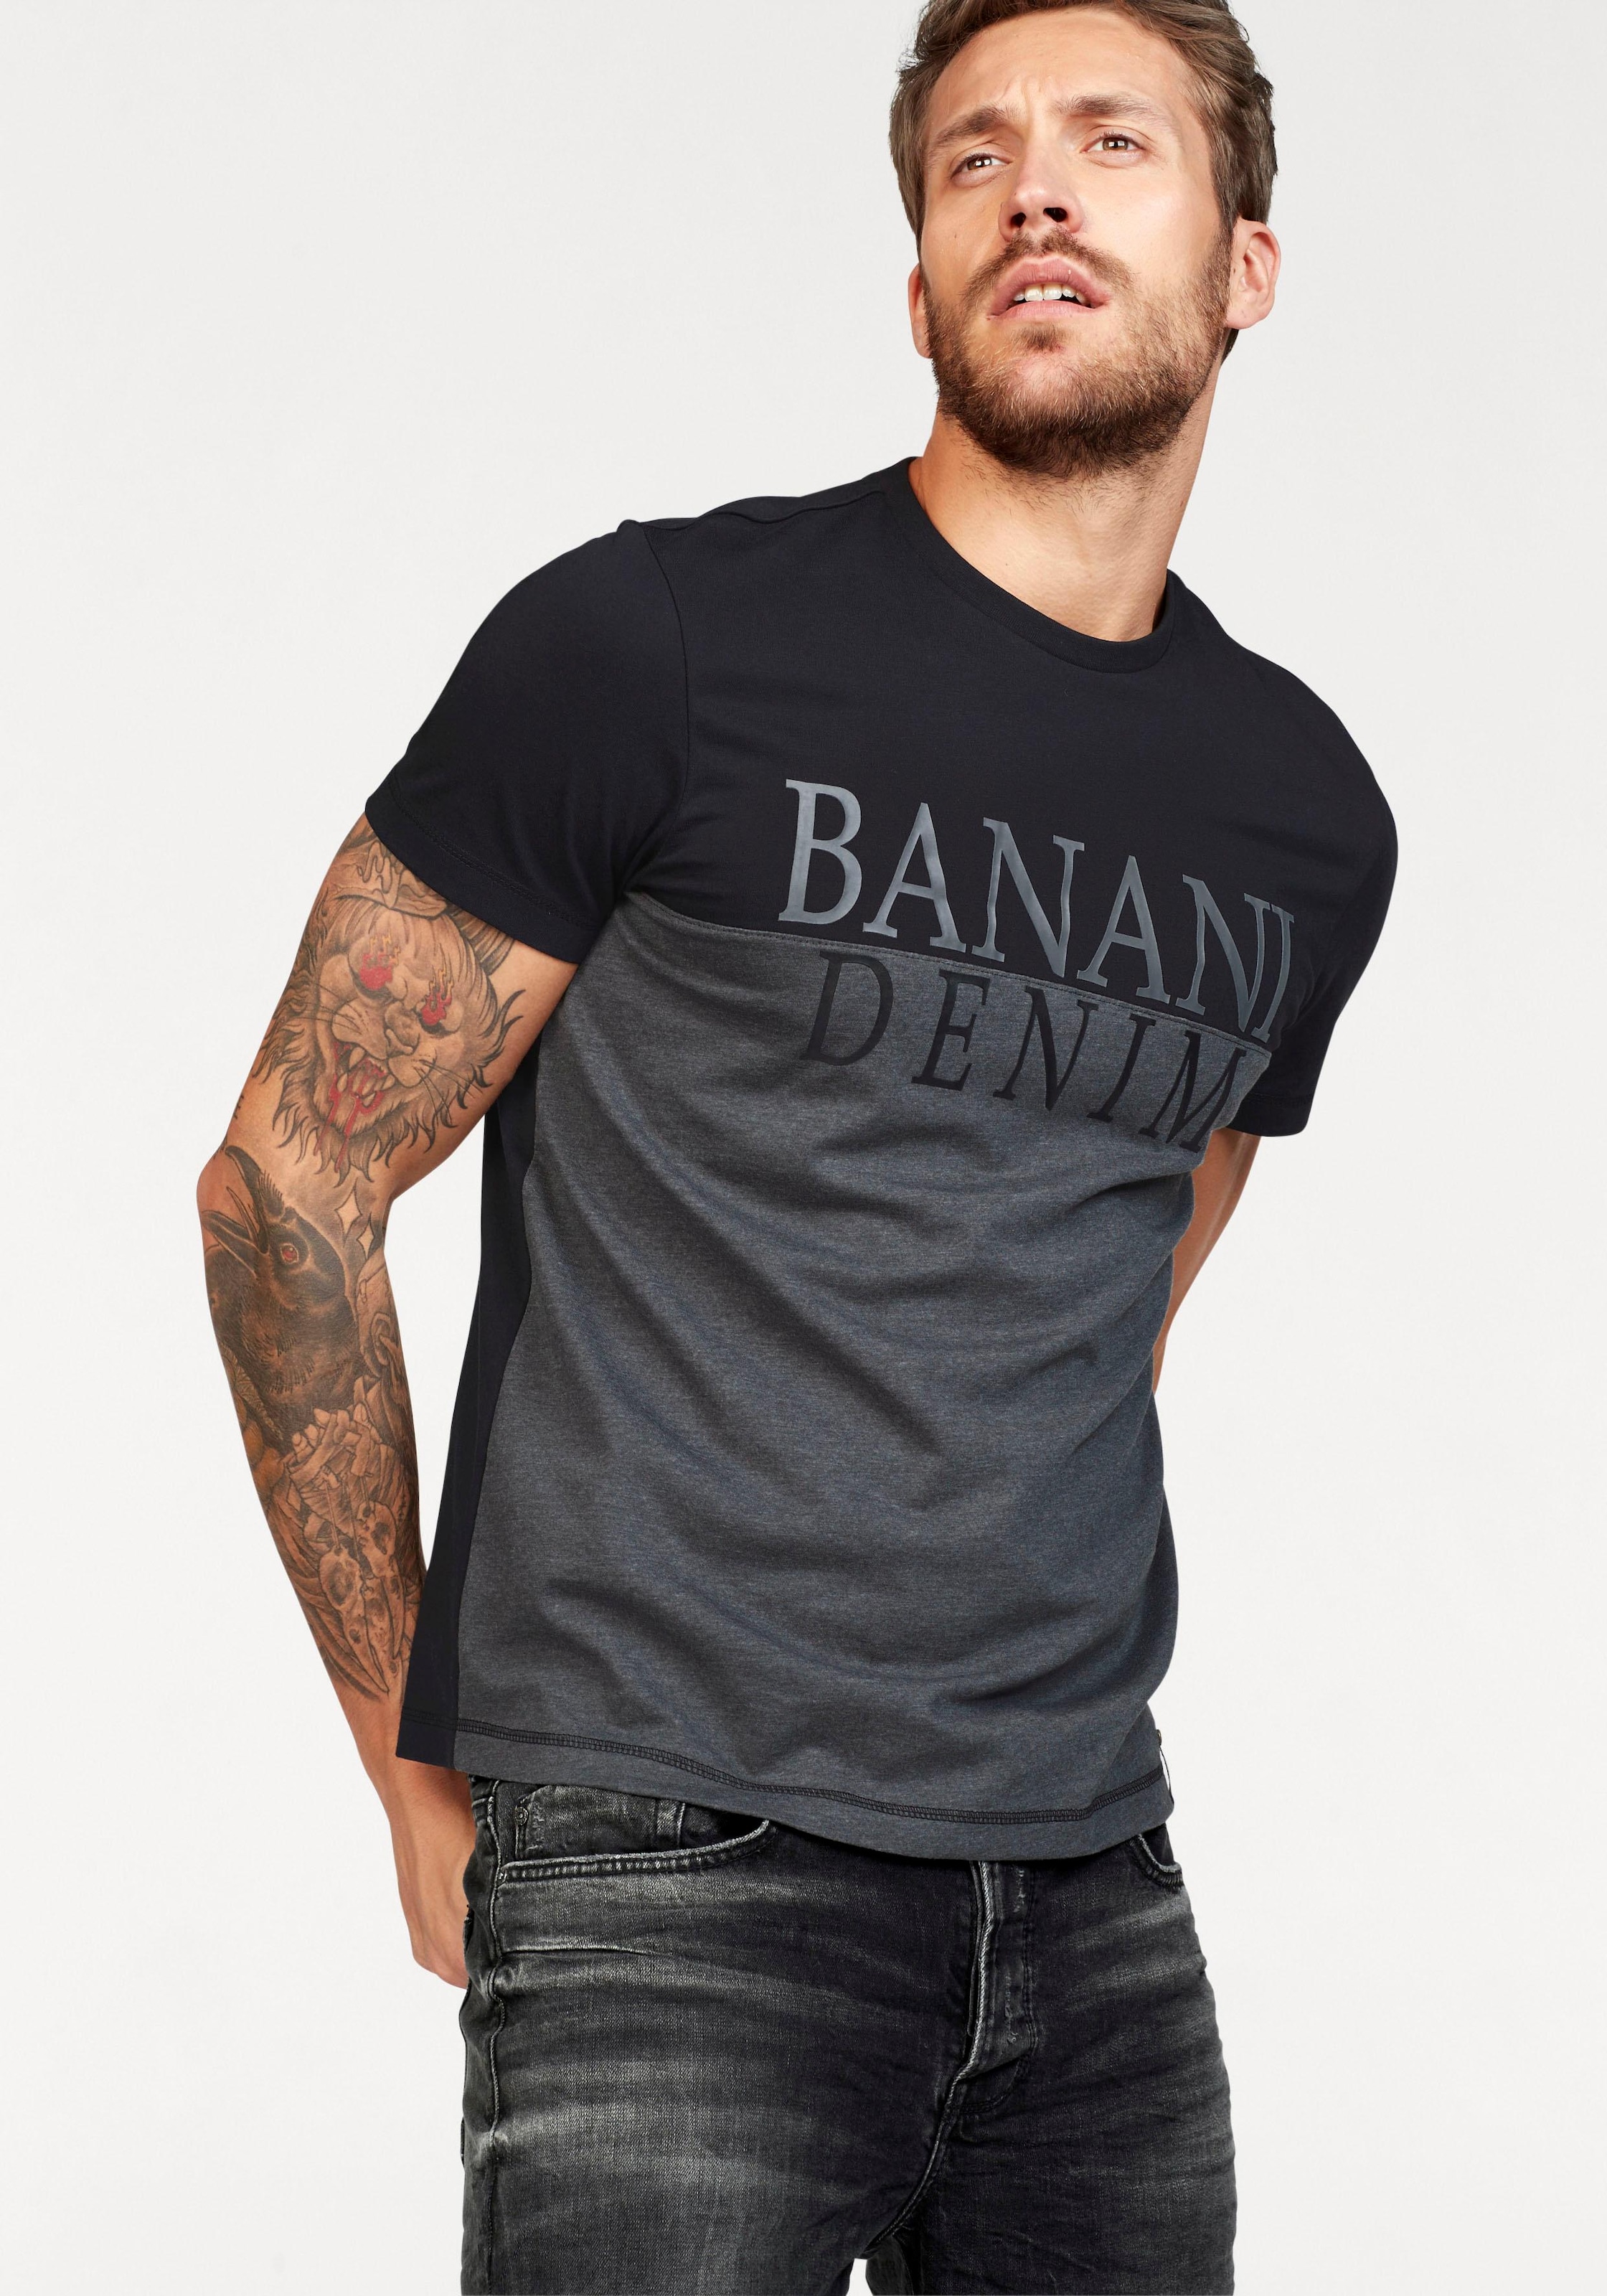 T-Shirt OTTO Bruno bei Banani shoppen online